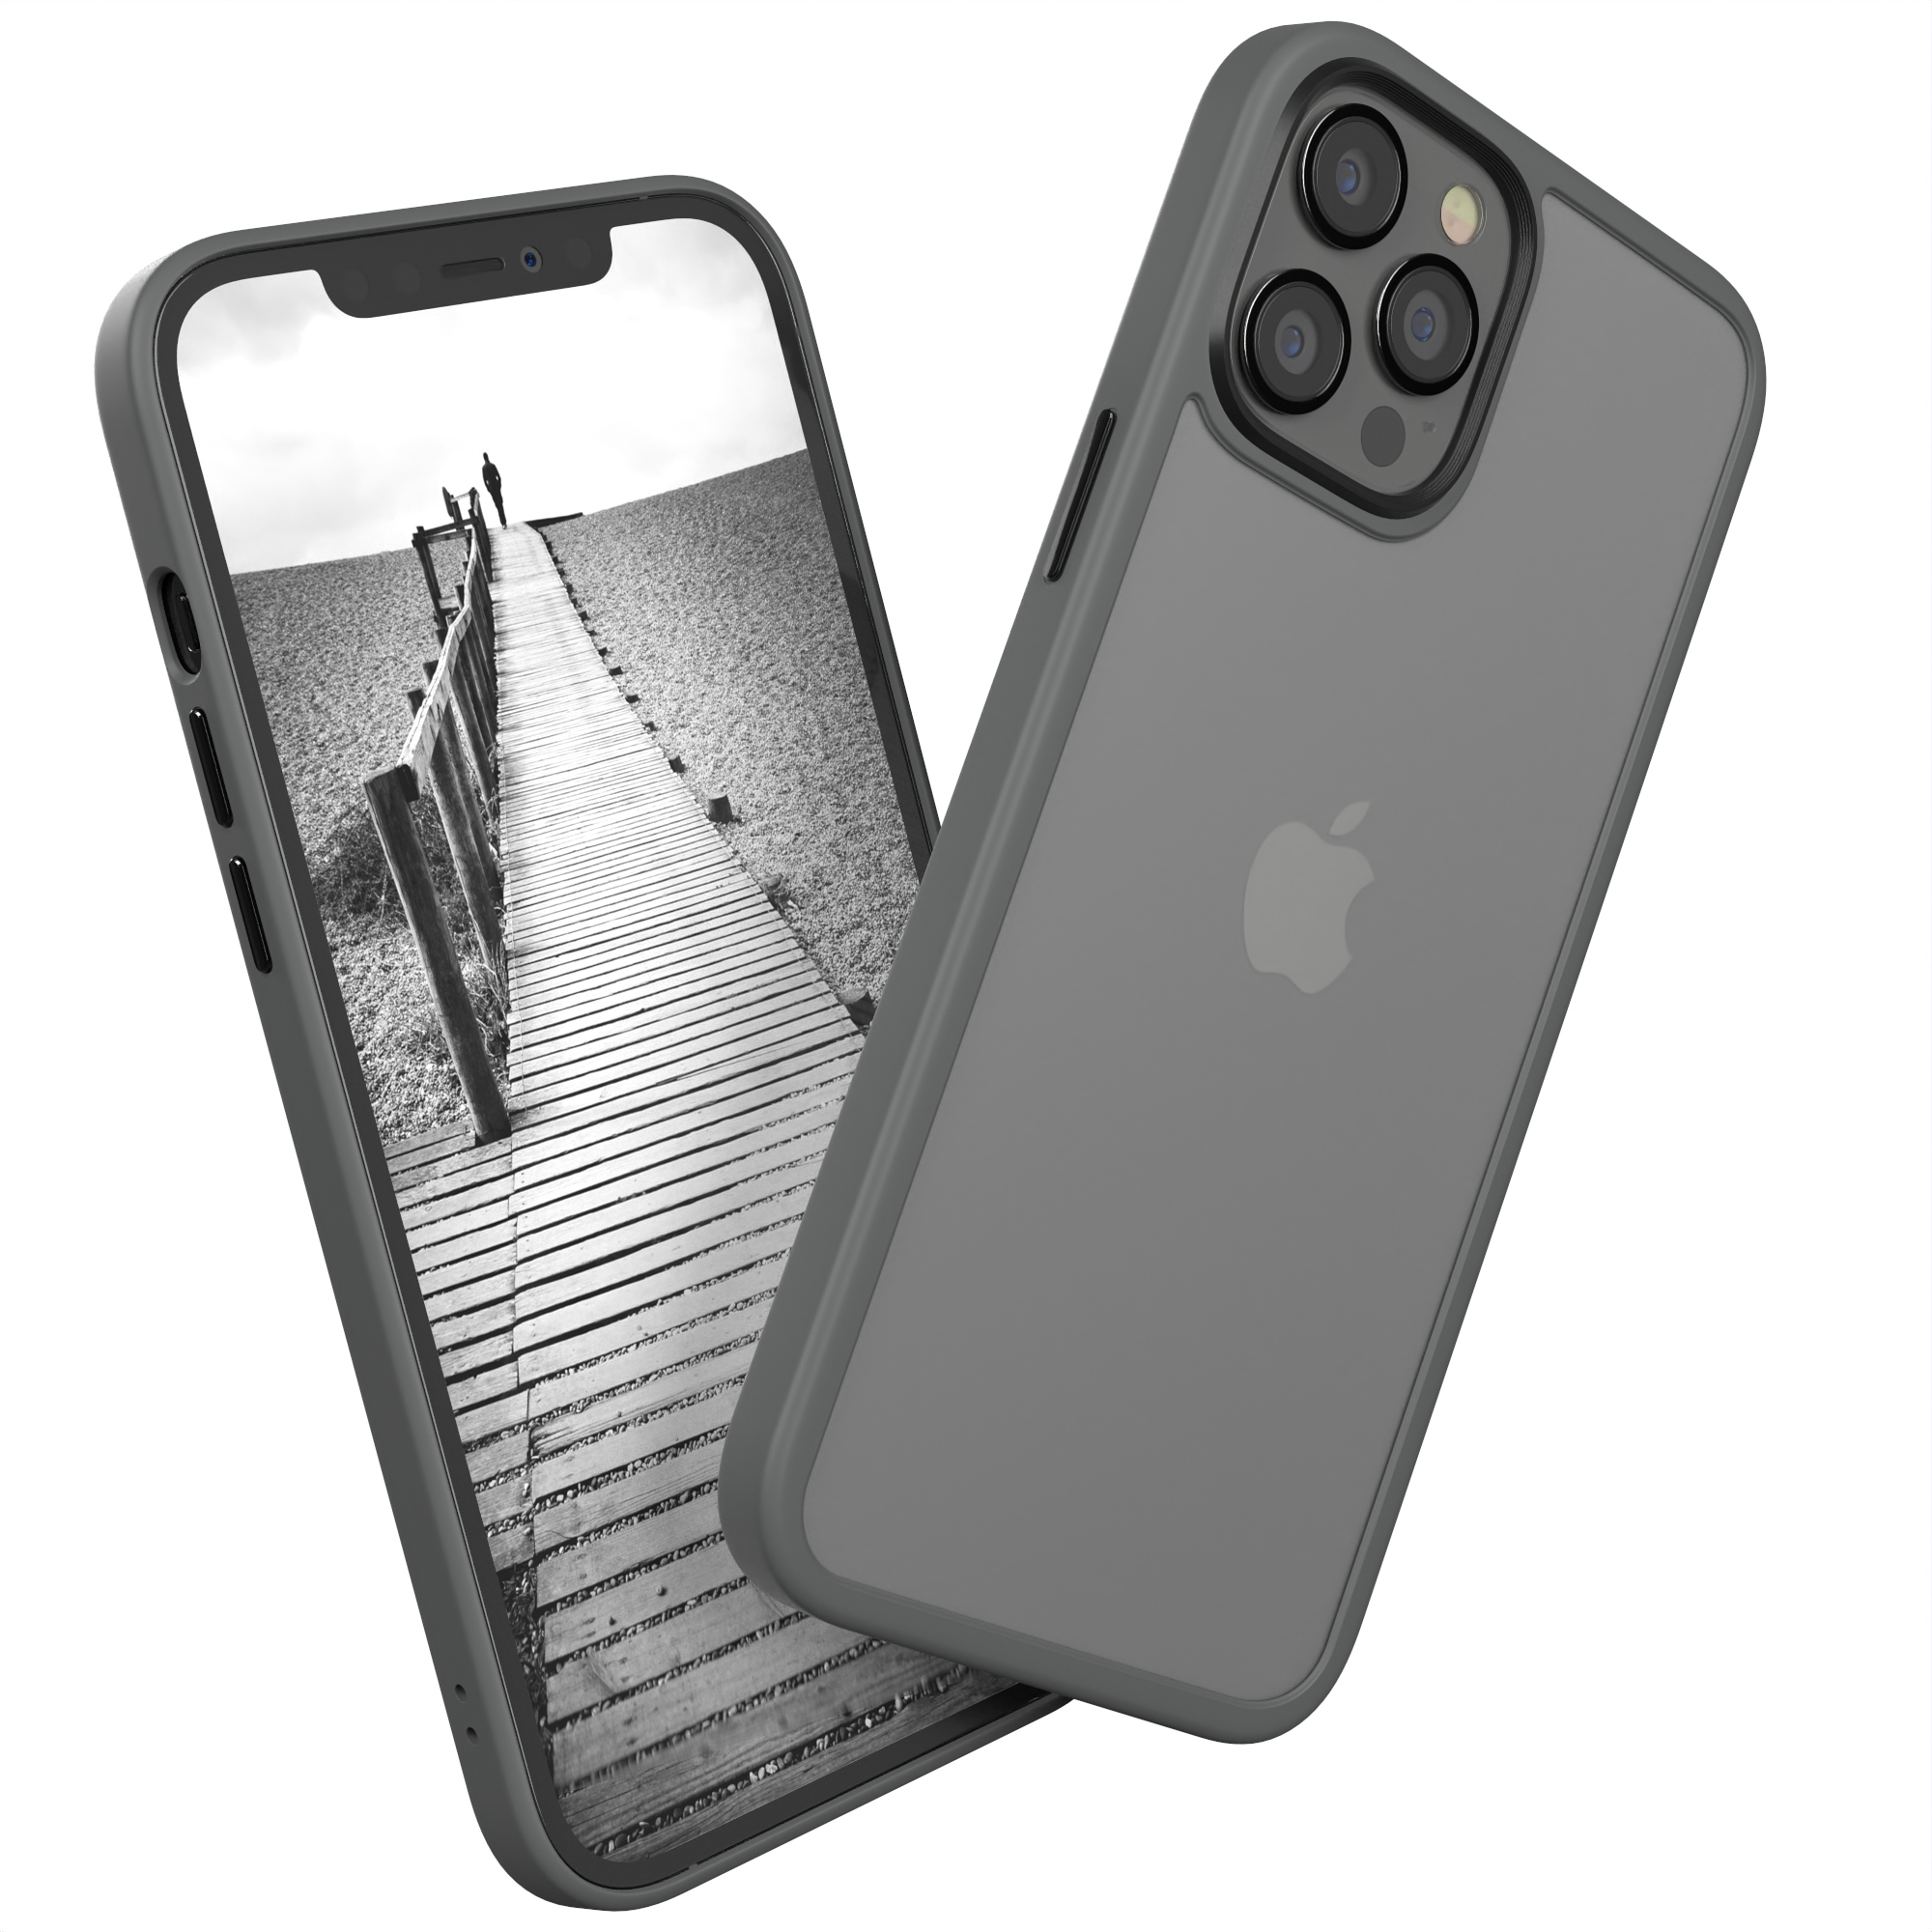 EAZY CASE Outdoor Case Matt, Apple, Grau 12 iPhone Pro Backcover, Max